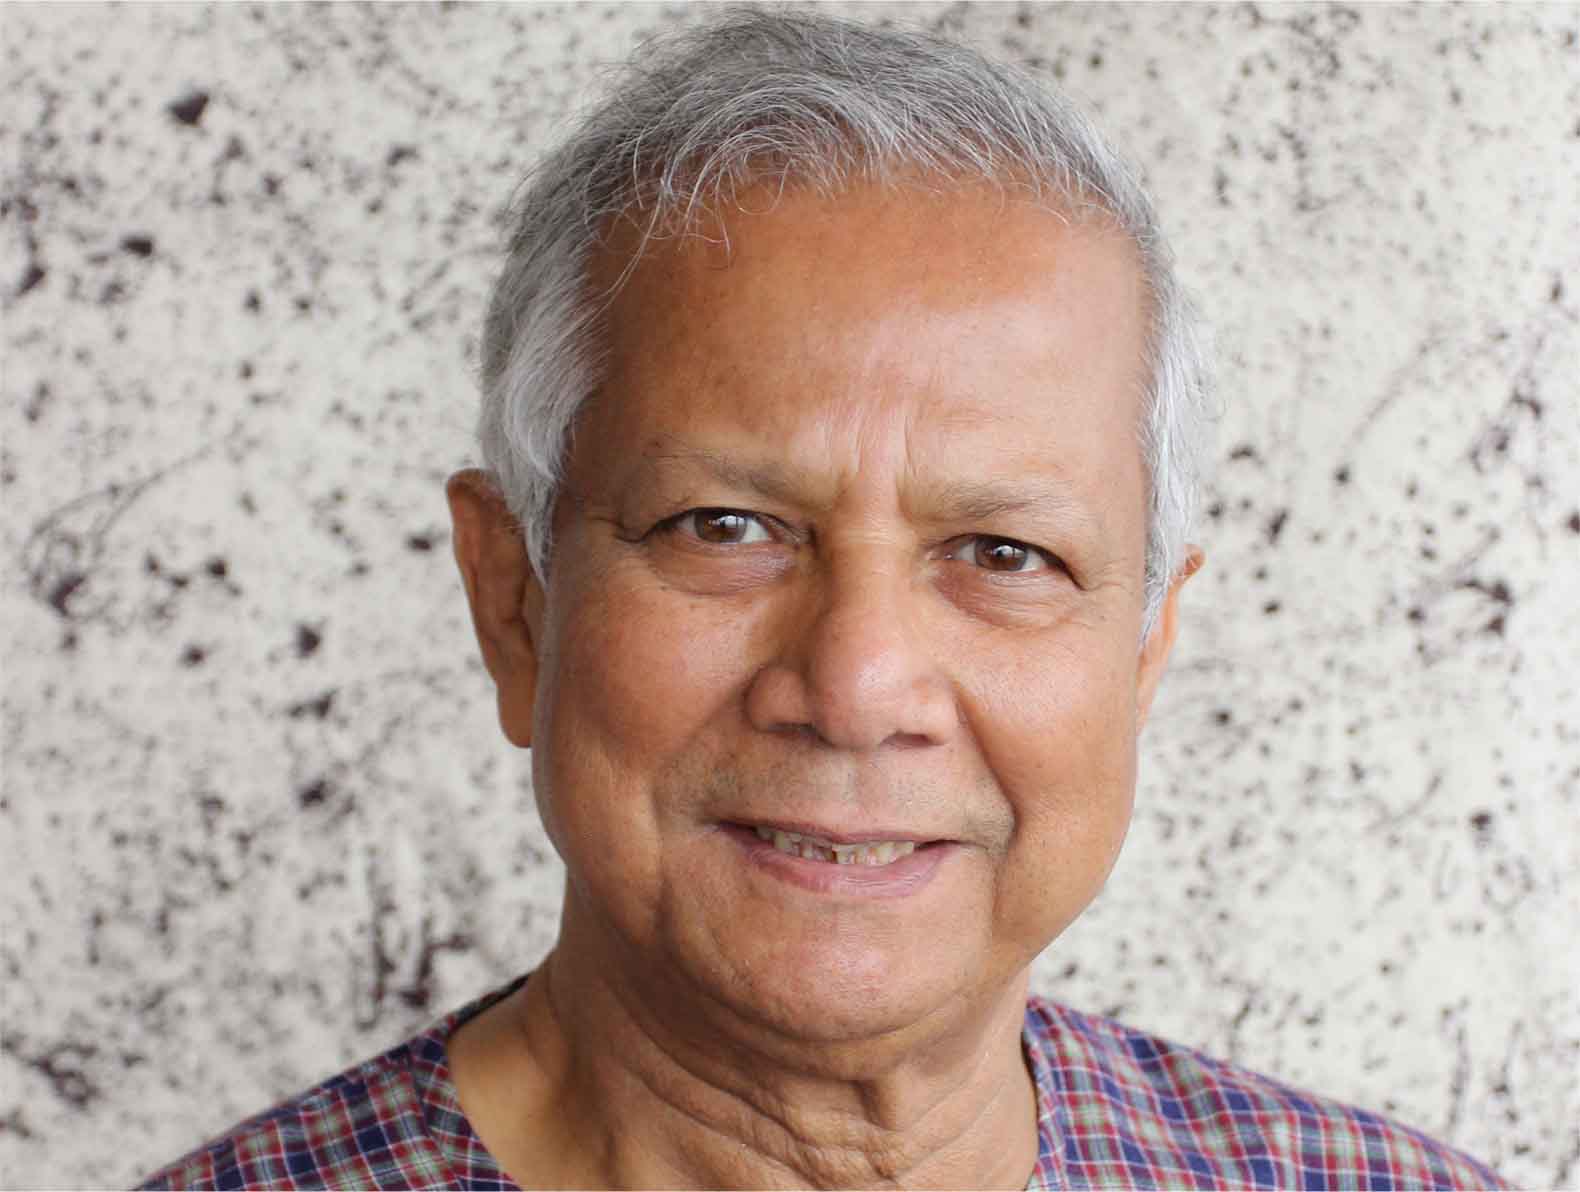 professor Muhammad Yunus smiling for the camera